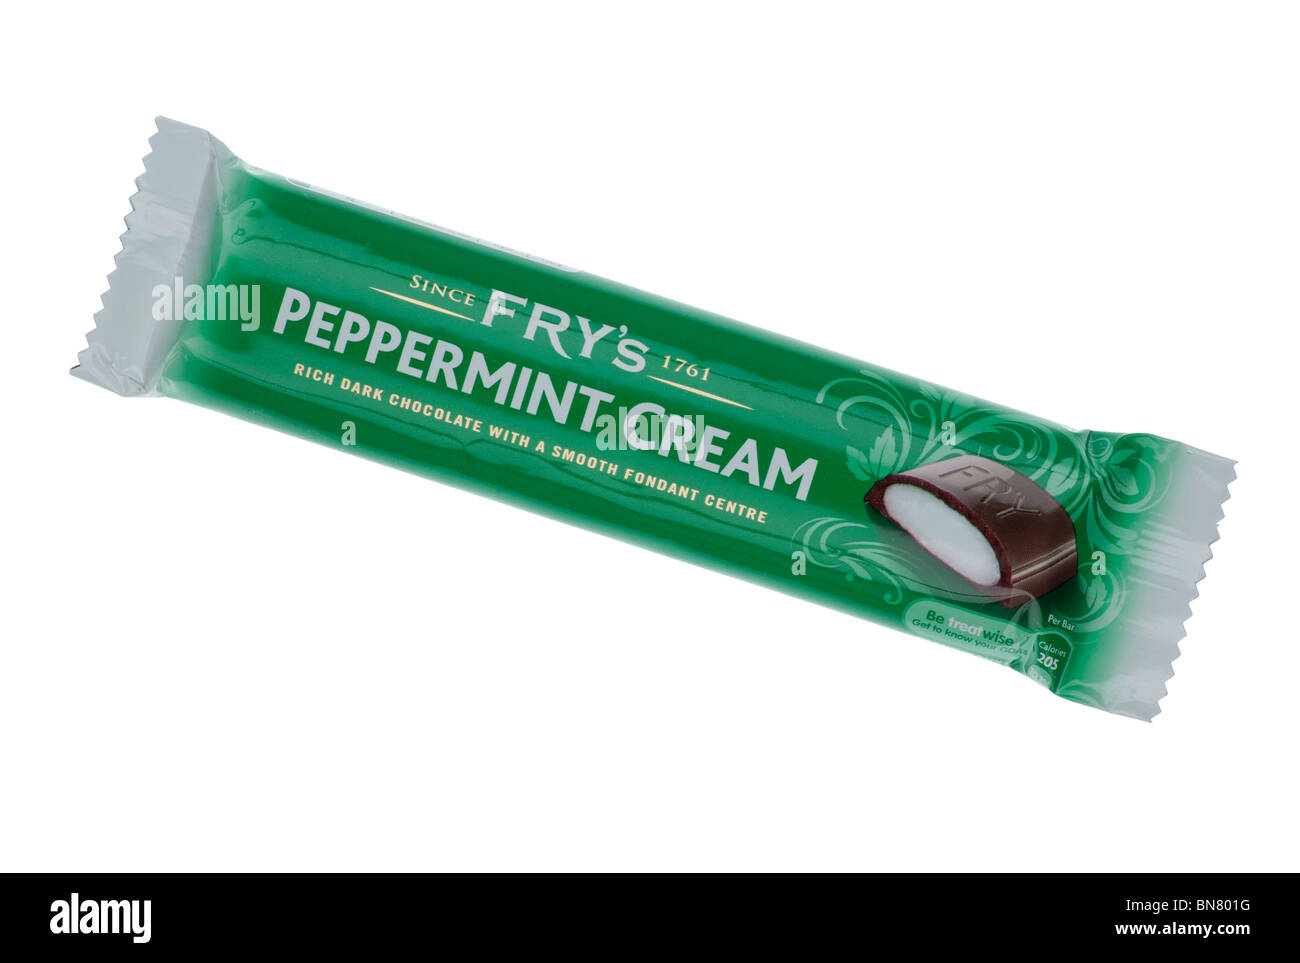 Fry's Peppermint Cream Chocolate Bar Stock Photo